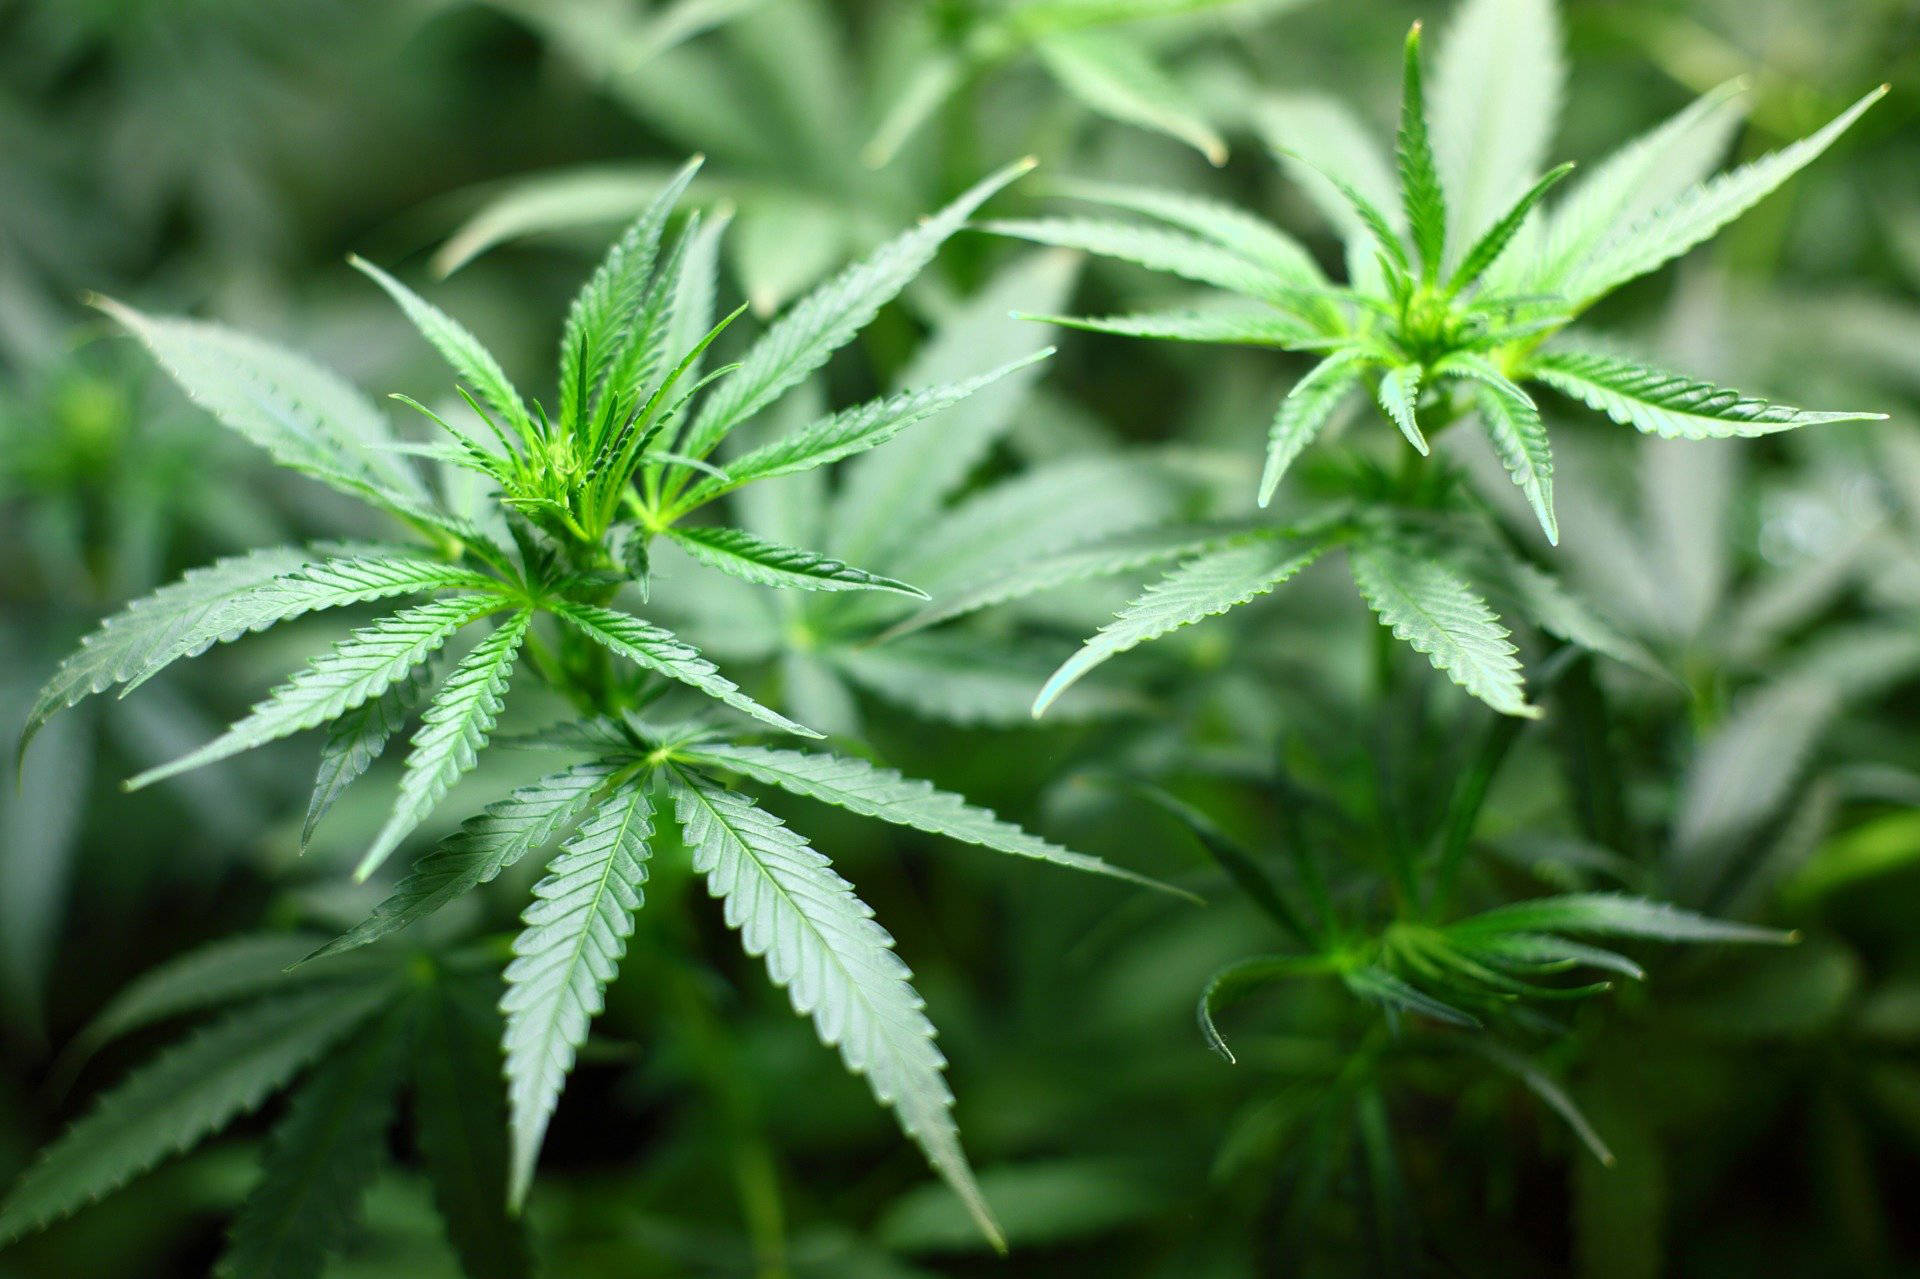 County considers marijuana grow options